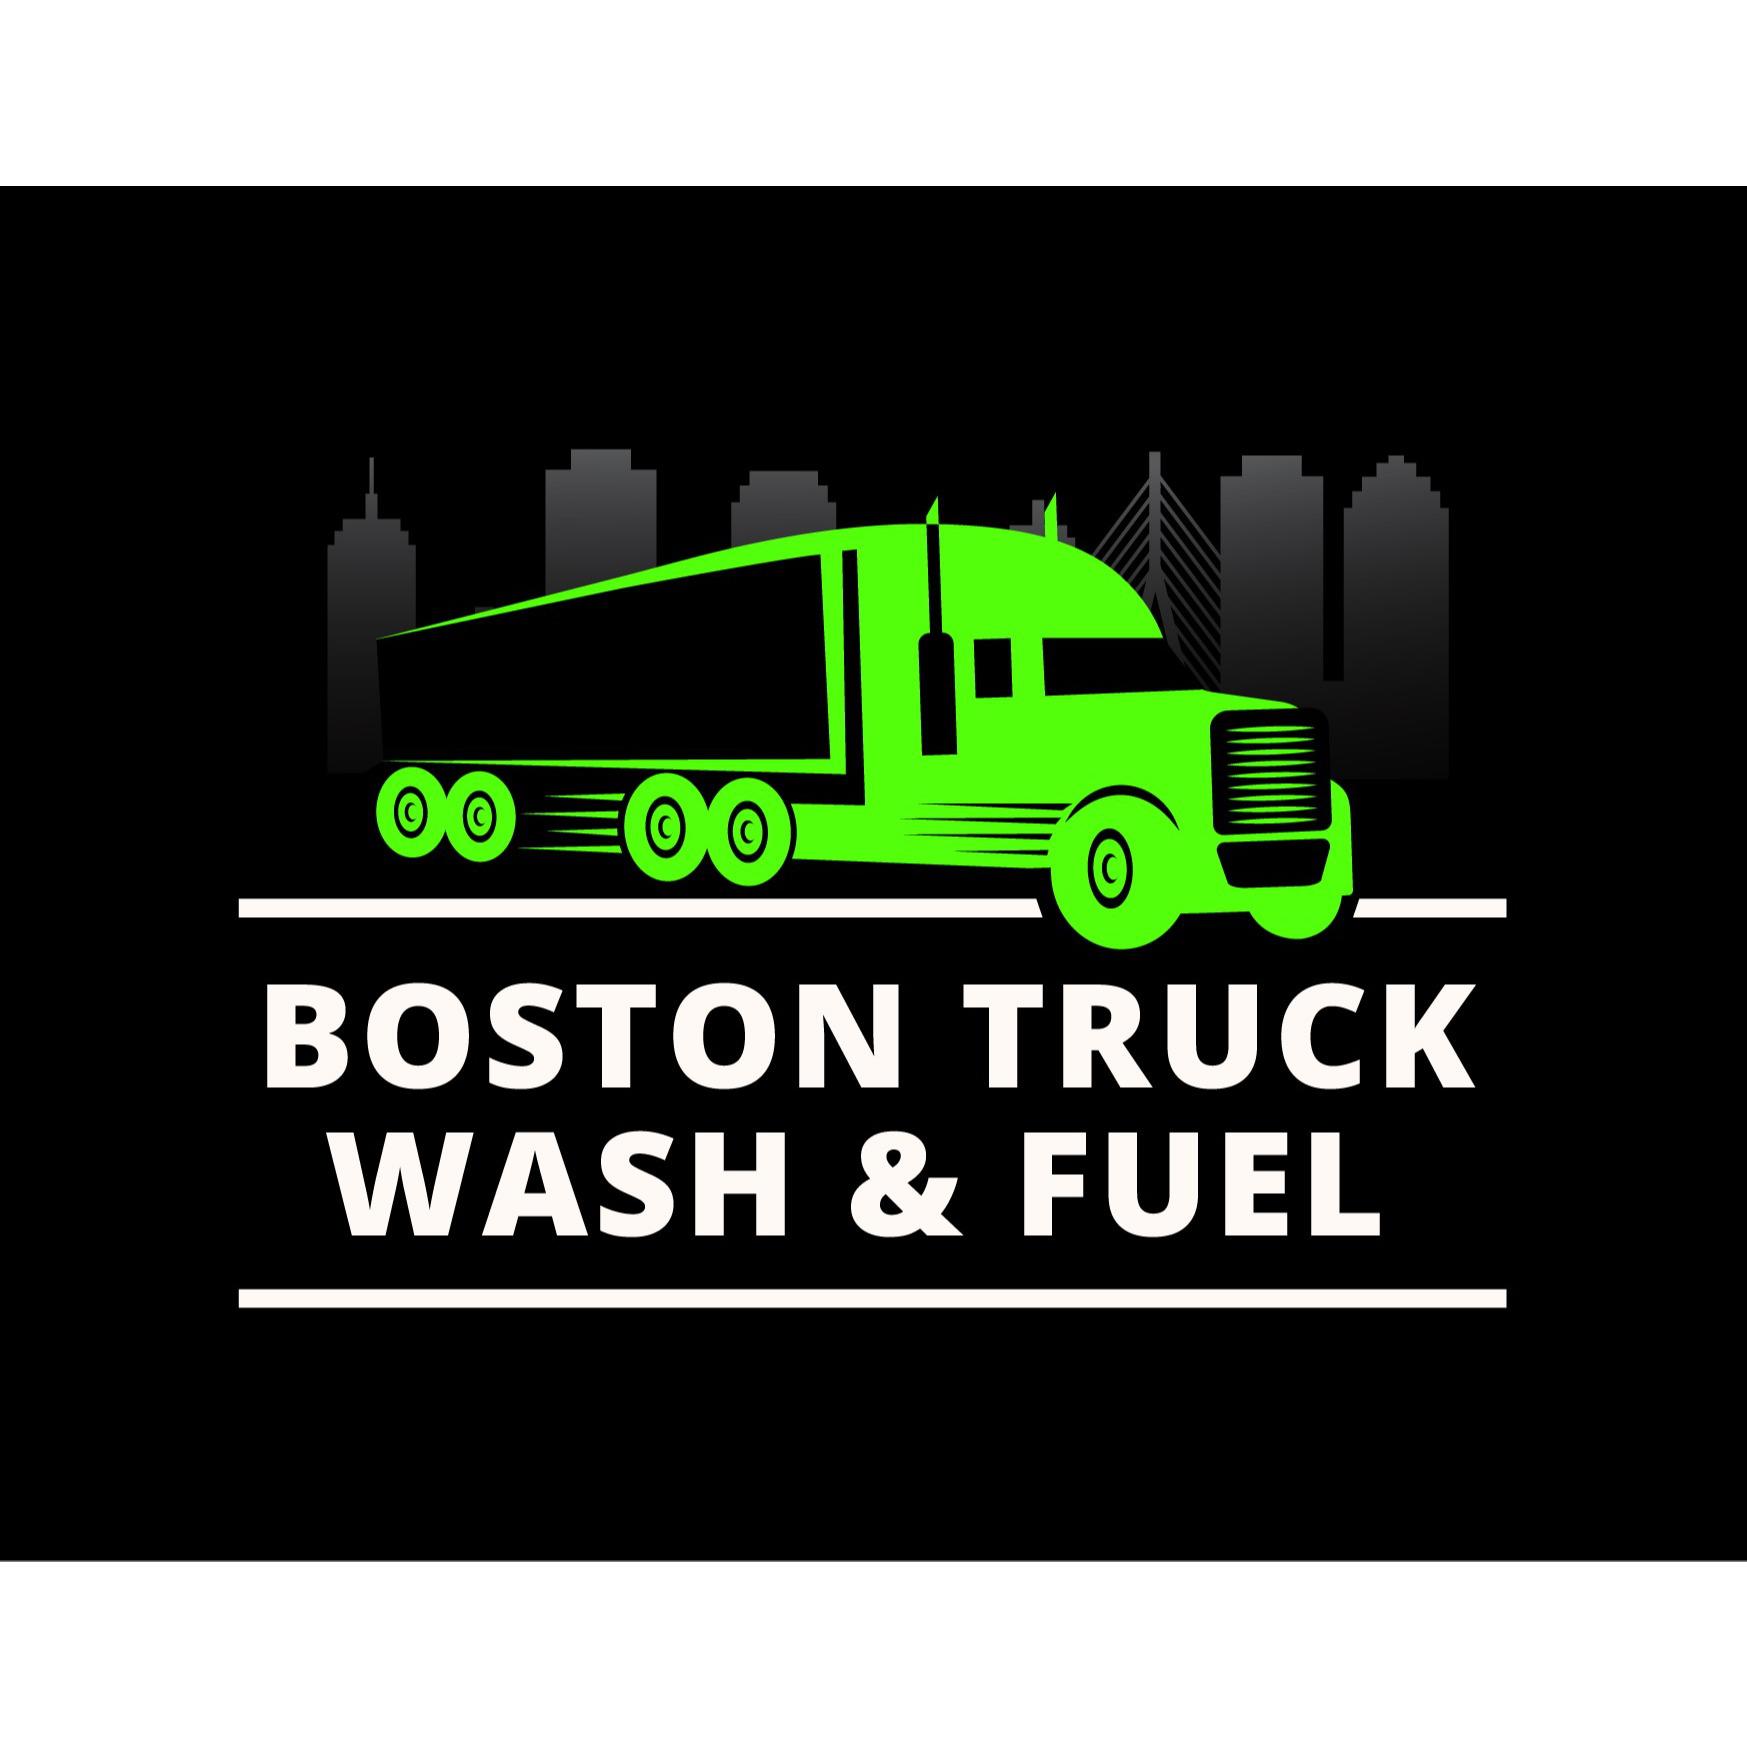 Boston Truck Wash & Fuel - Truck Wash & Cleaning - Woburn, MA 01801 - (781)938-8123 | ShowMeLocal.com